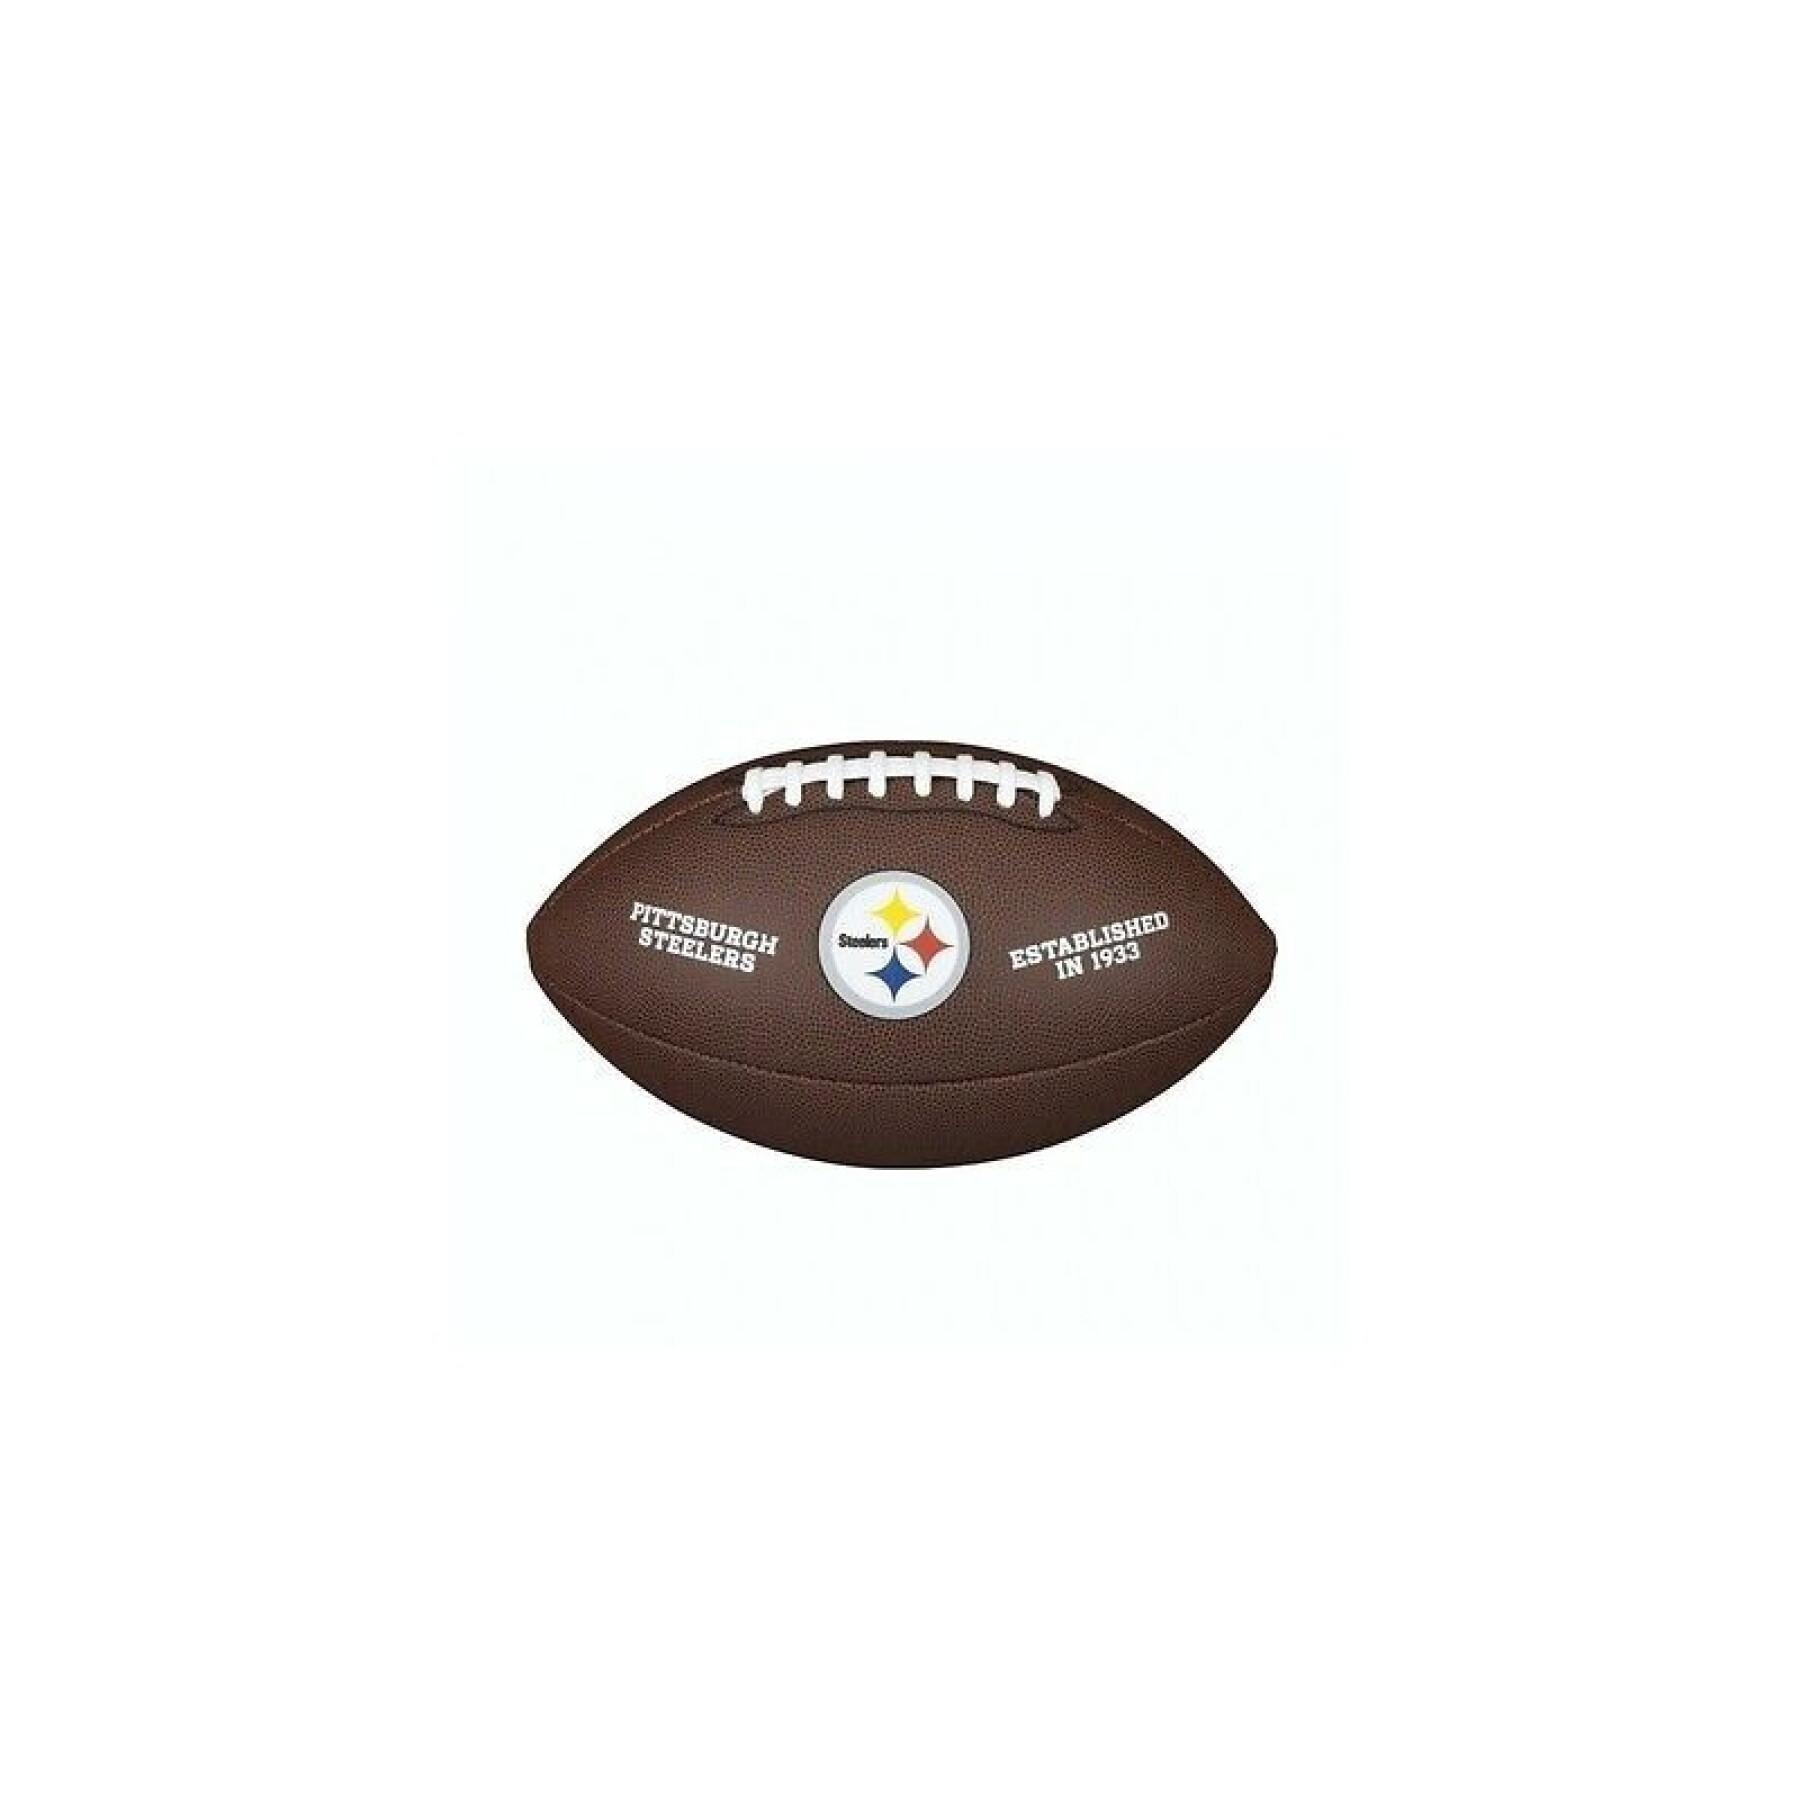 Bola Wilson Steelers NFL com licença